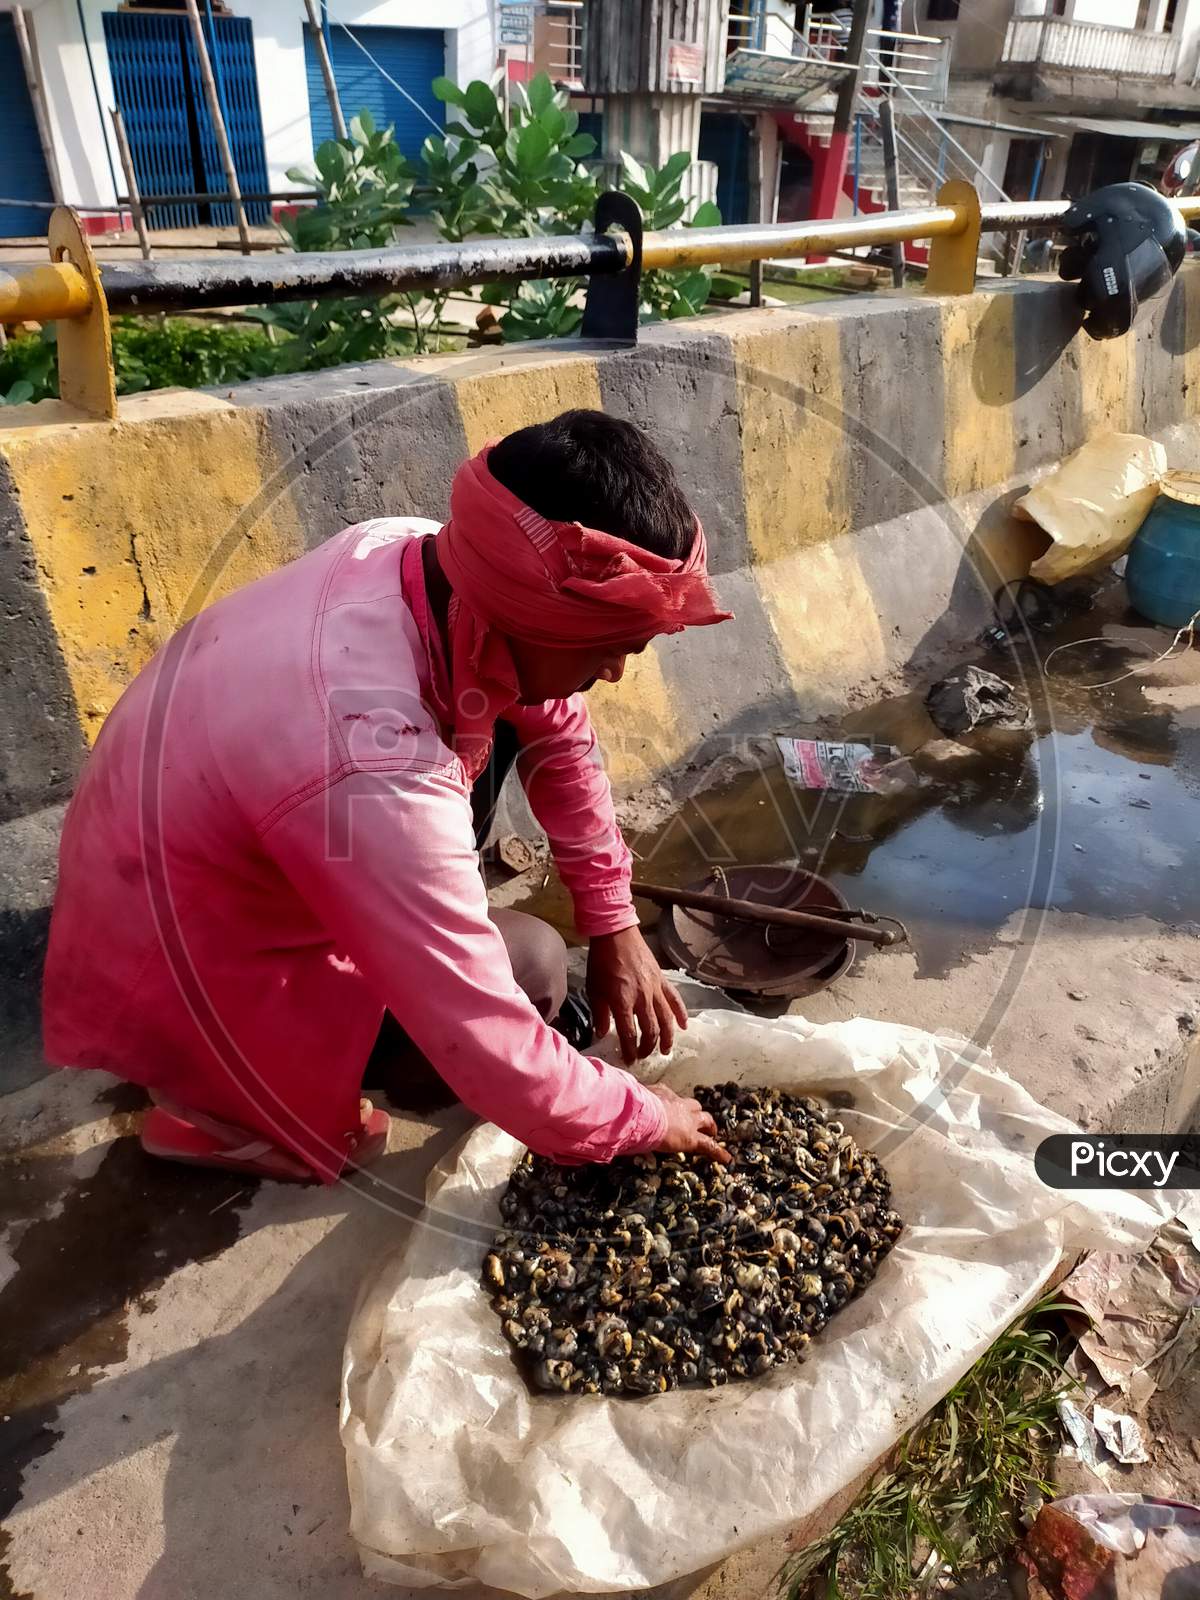 A street vendor selling aitha (snails) on the roadside in Bihar